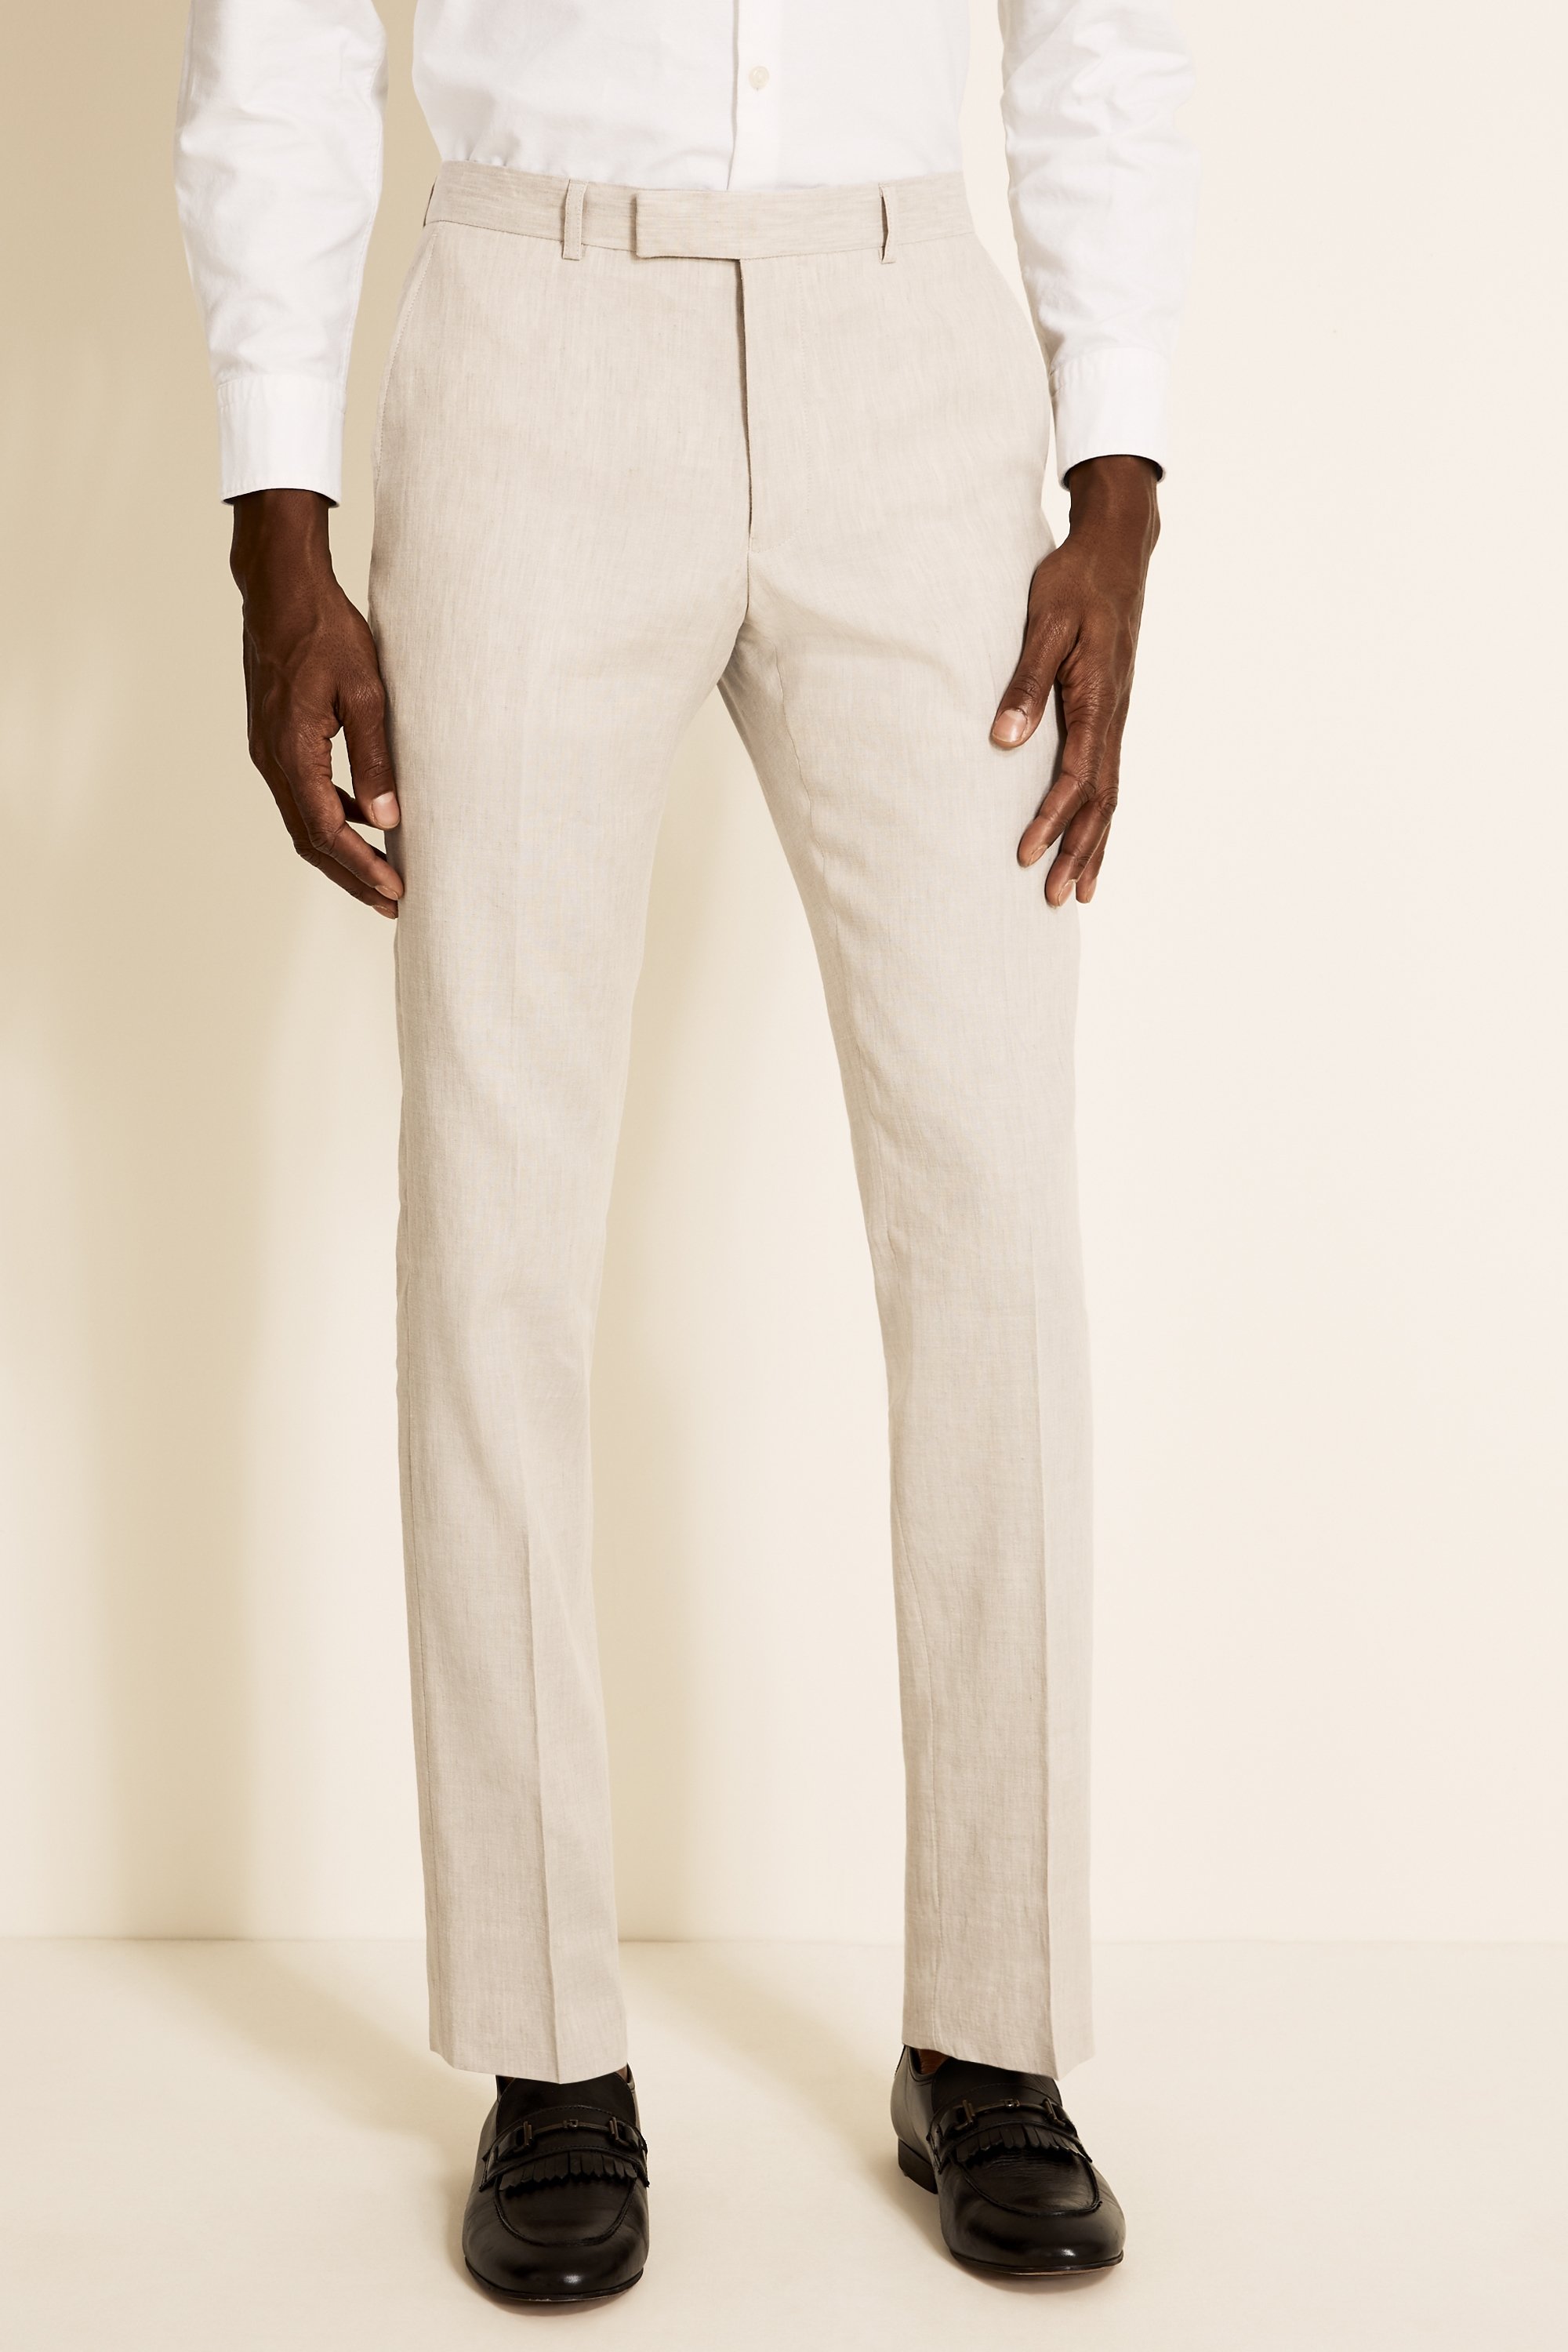 Gina Tricot DENISE TROUSERS - Trousers - lt linen beige/beige -  Zalando.co.uk